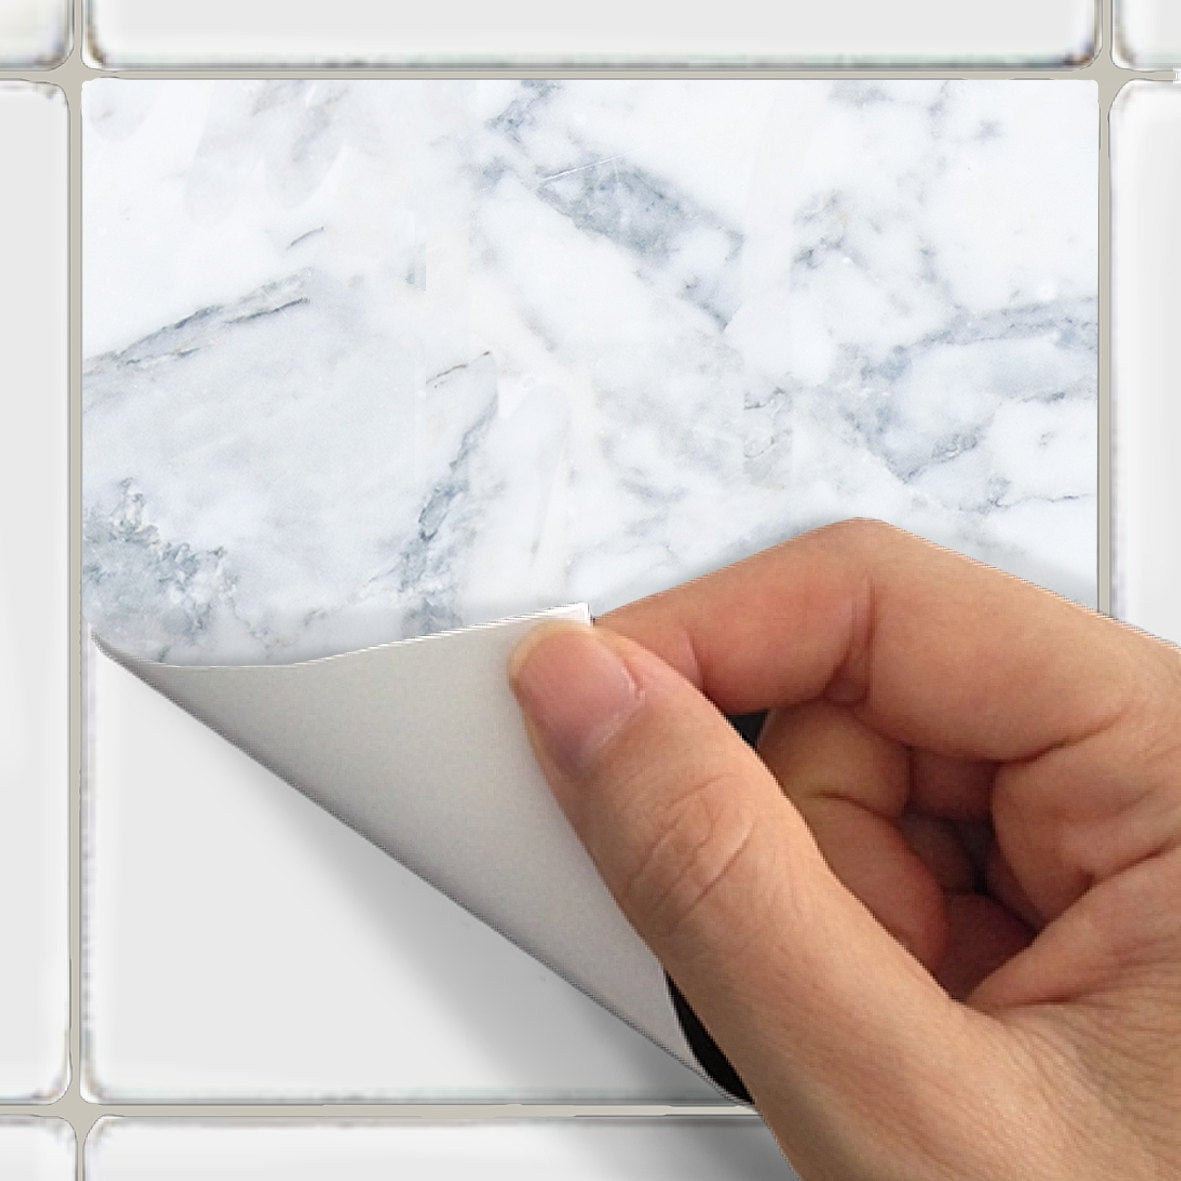 Tile Stickers For Bathroom
 Kitchen bathroom Tile Decals Vinyl Sticker White Marble